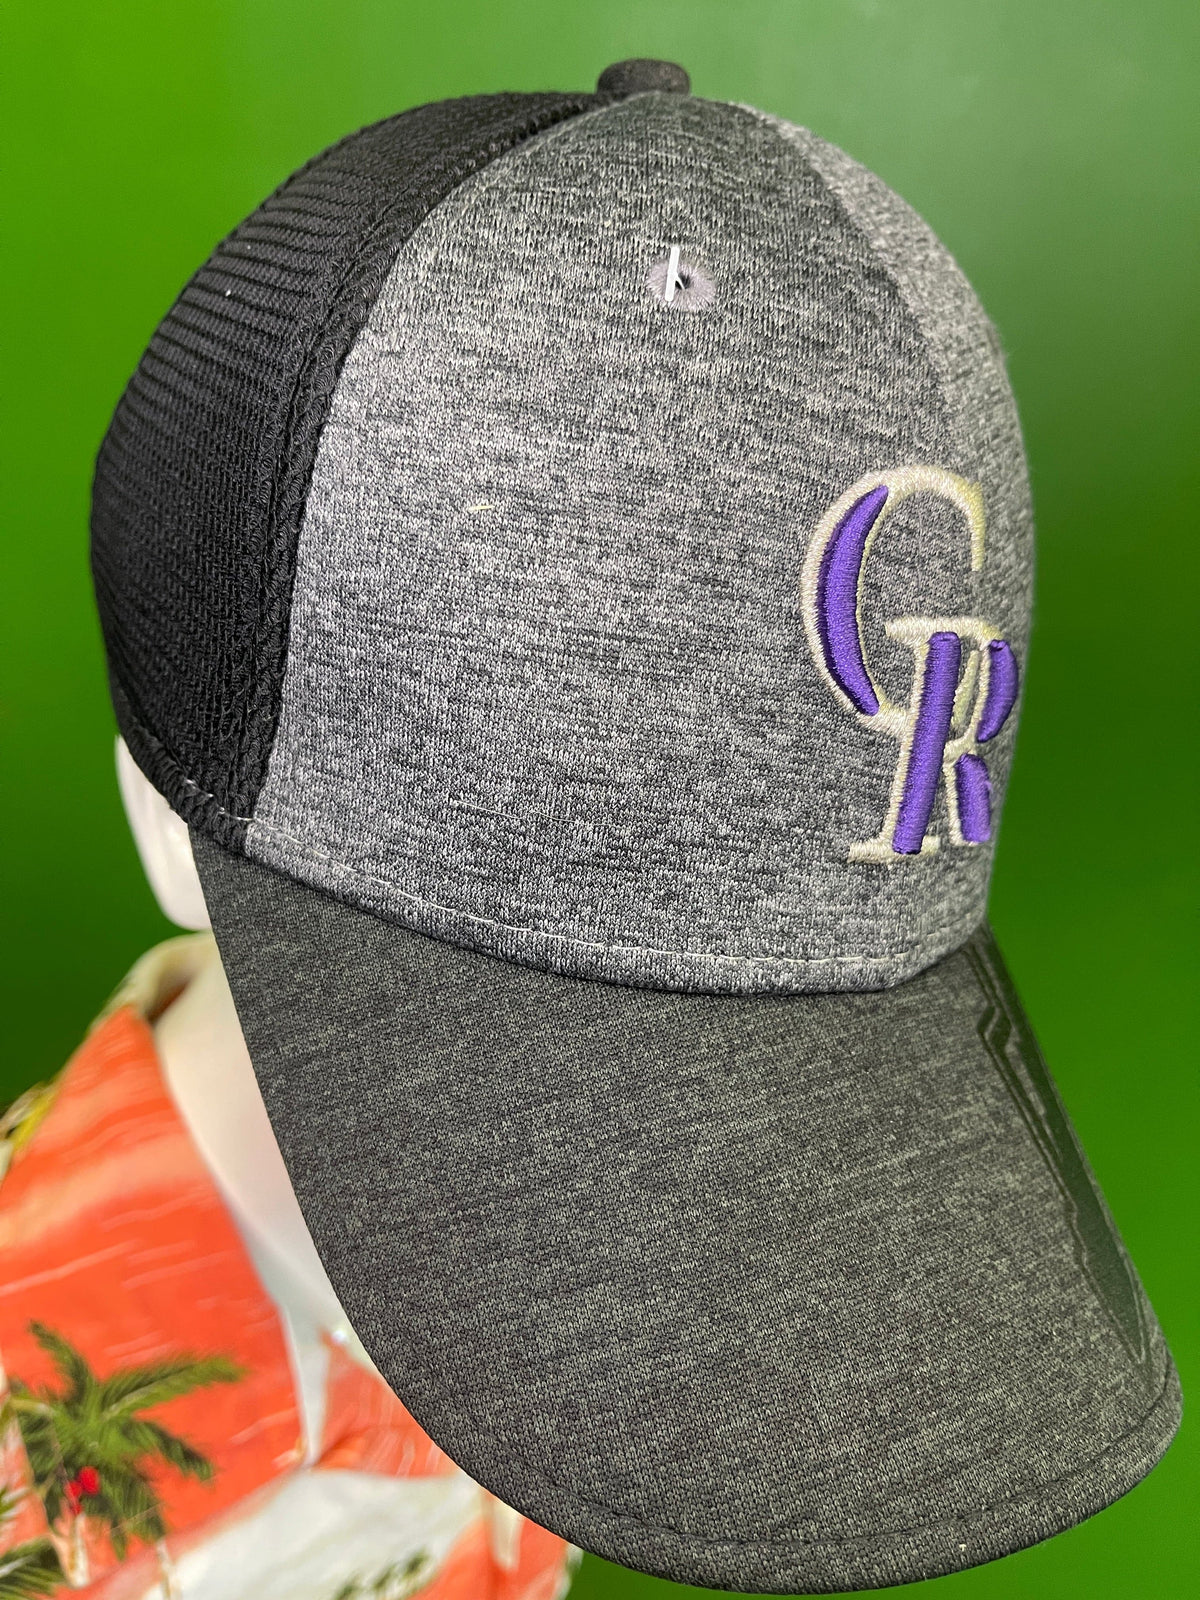 MLB Colorado Rockies New Era 39THIRTY Grey/Black Hat/Cap Youth OSFA